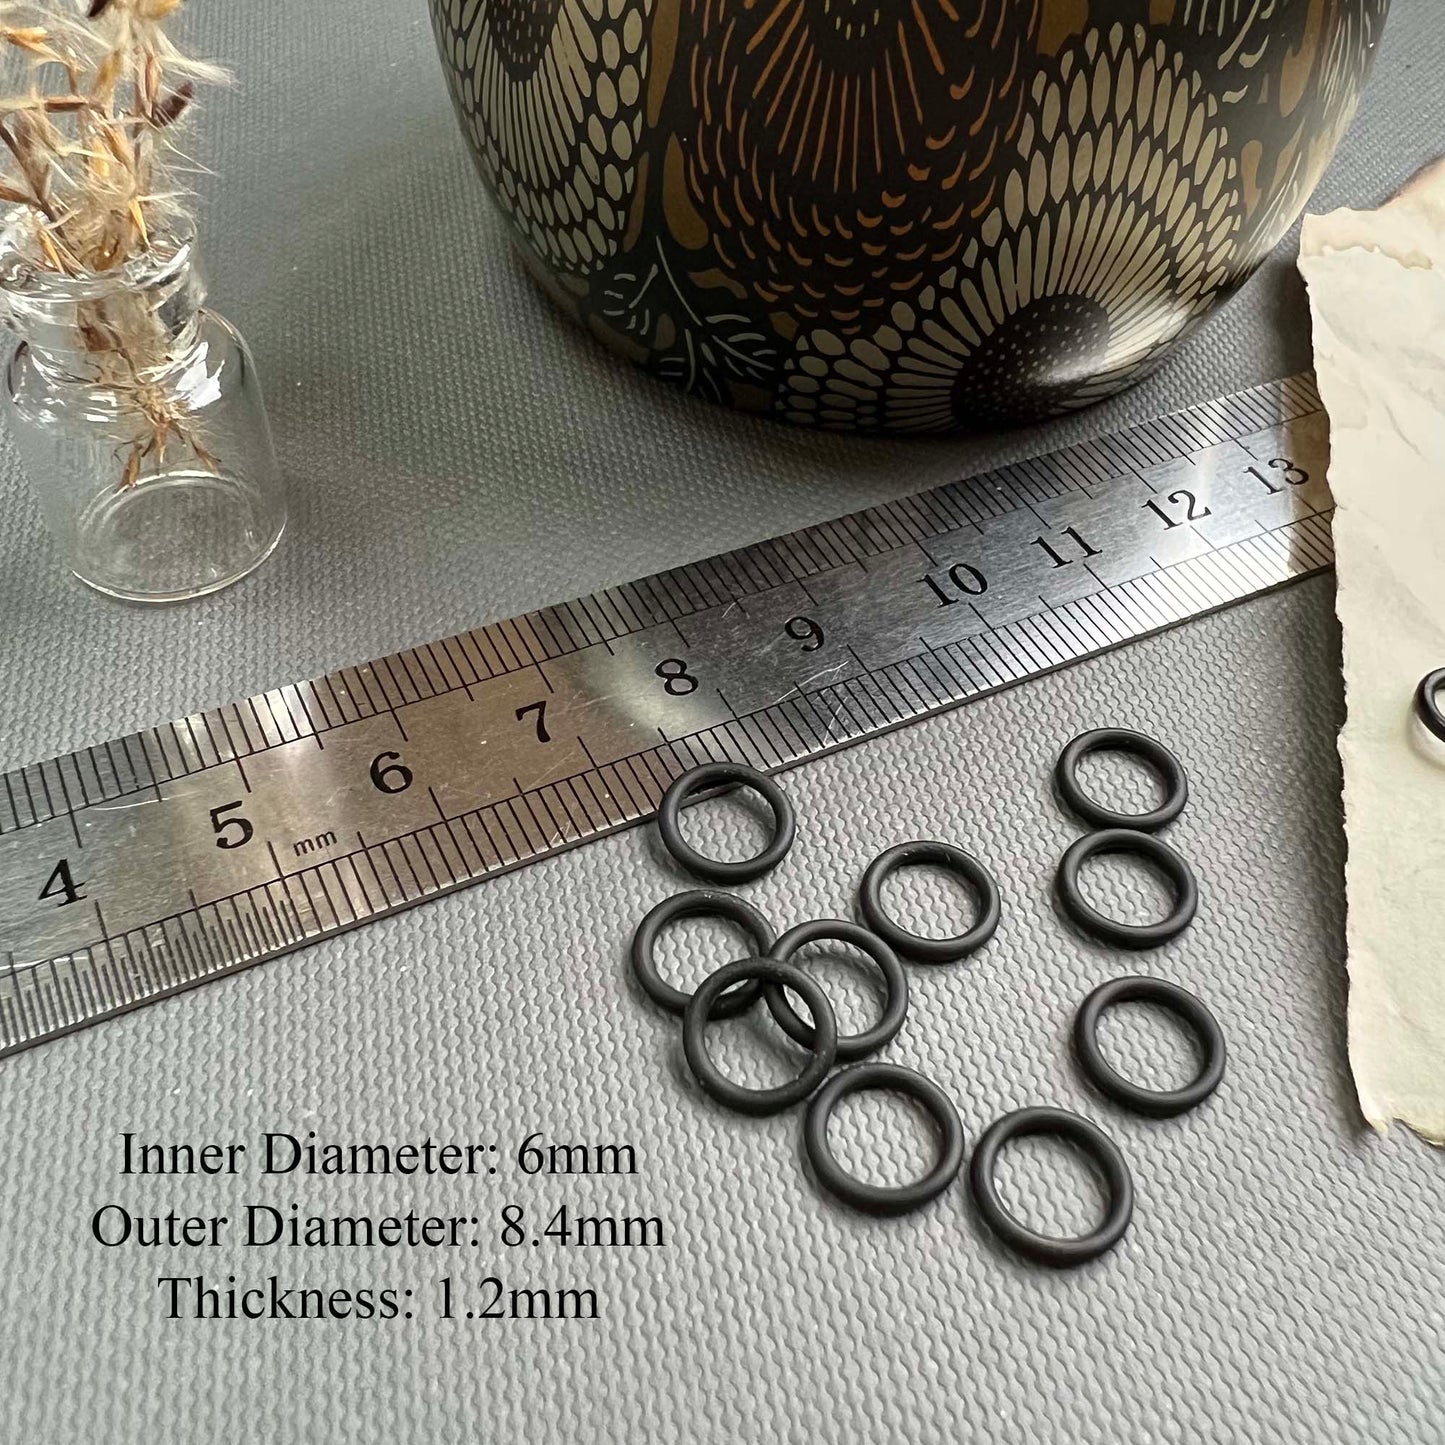 8.4mm Rubber O-Rings (ID: 6mm) - Black